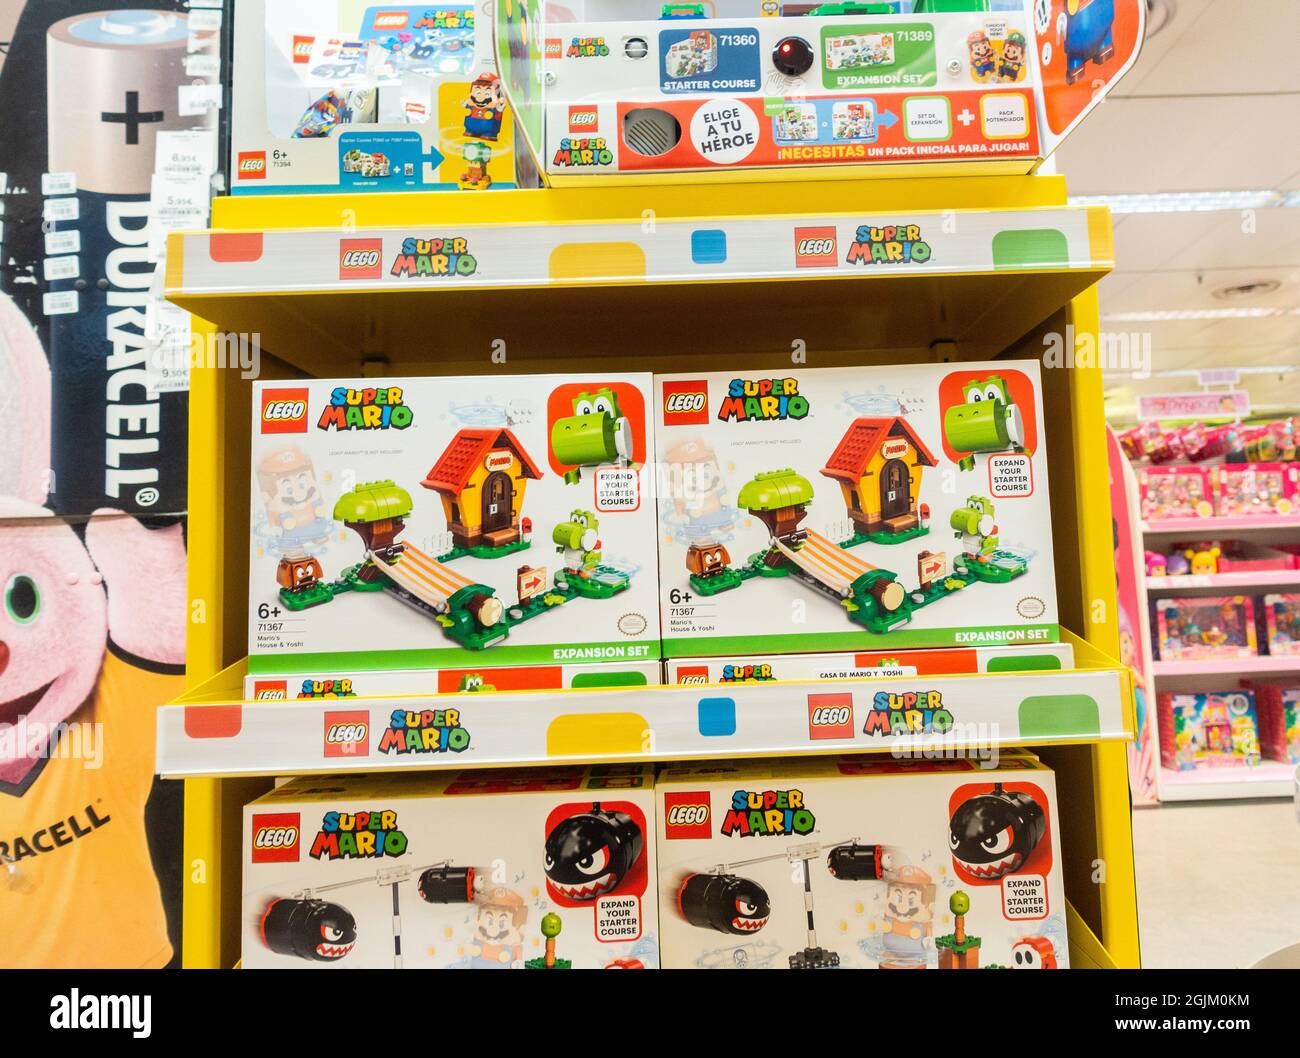 Super Mario Lego in toy store Stock Photo - Alamy